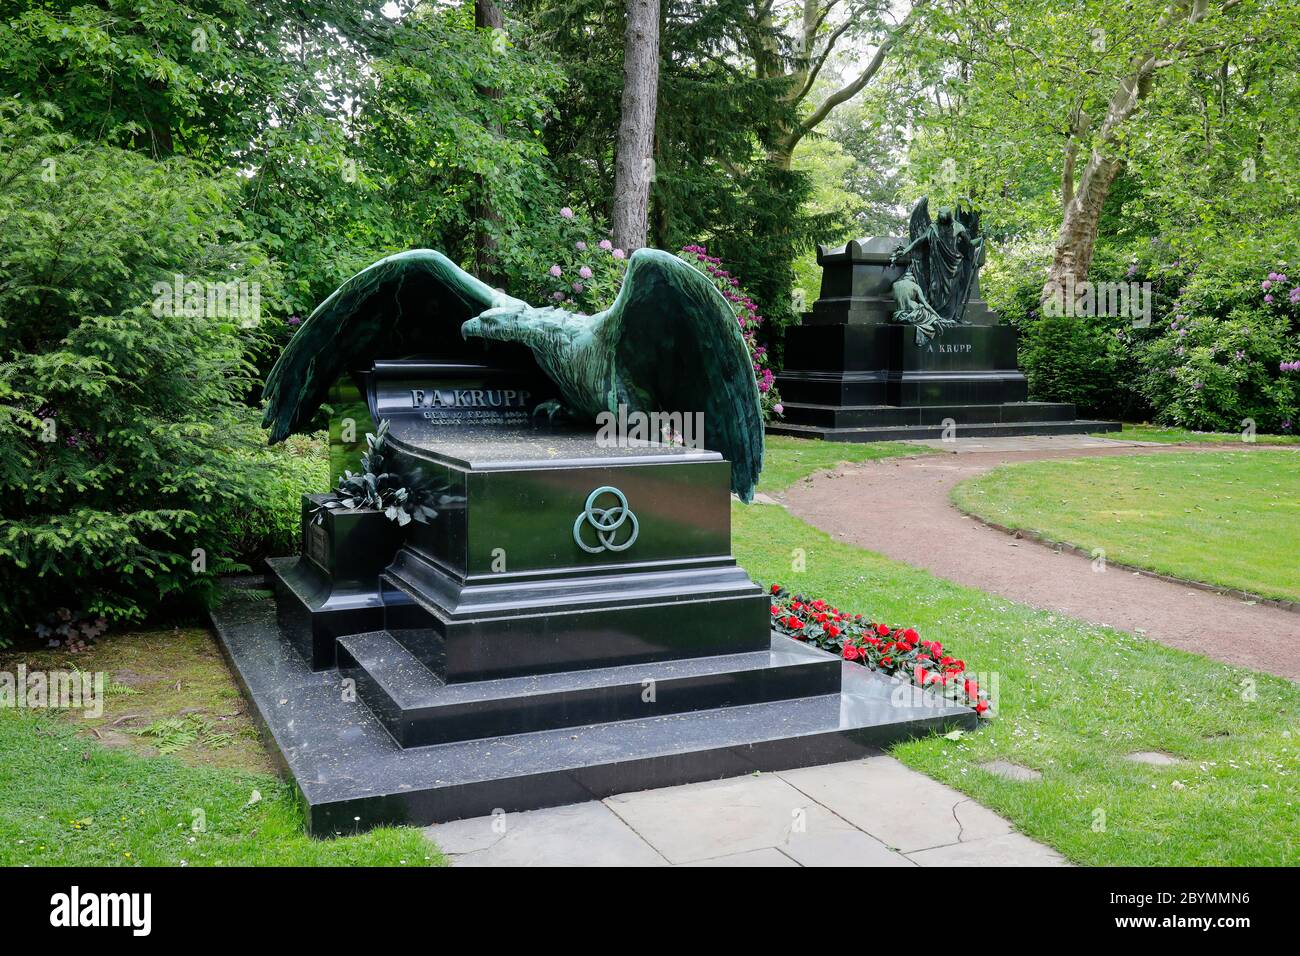 25.05.2020, Essen, North Rhine-Westphalia, Germany - Grave of Friedrich Alfred Krupp, family cemetery of the Krupp industrialist family, Bredeney ceme Stock Photo